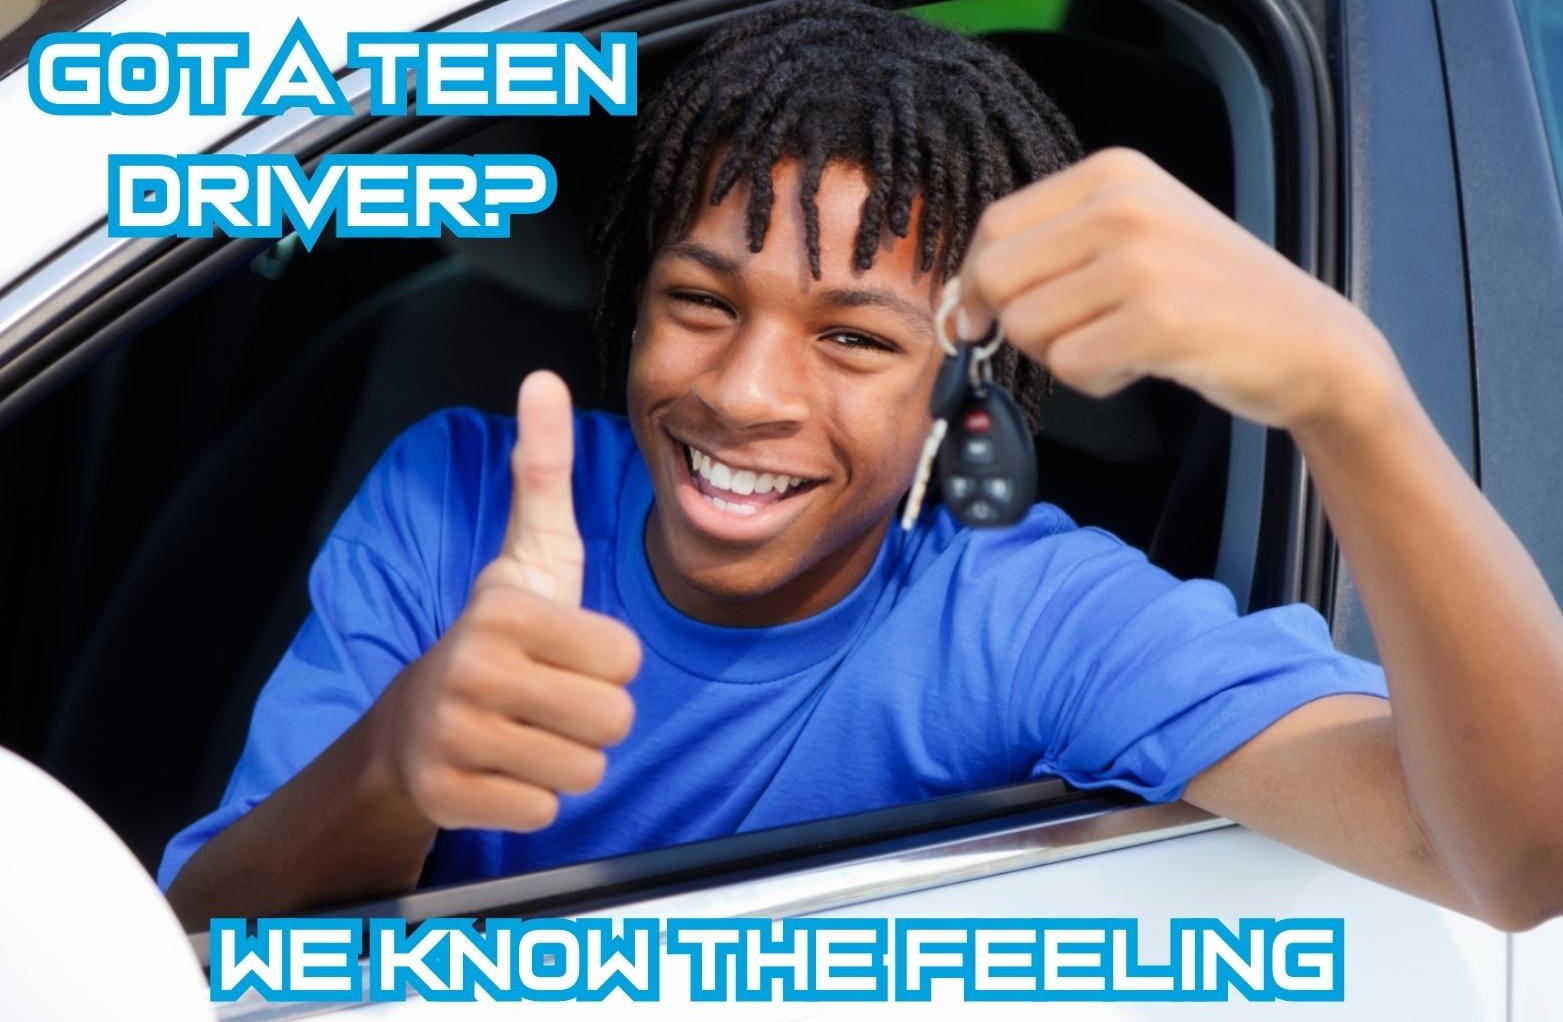 Teen Drivers